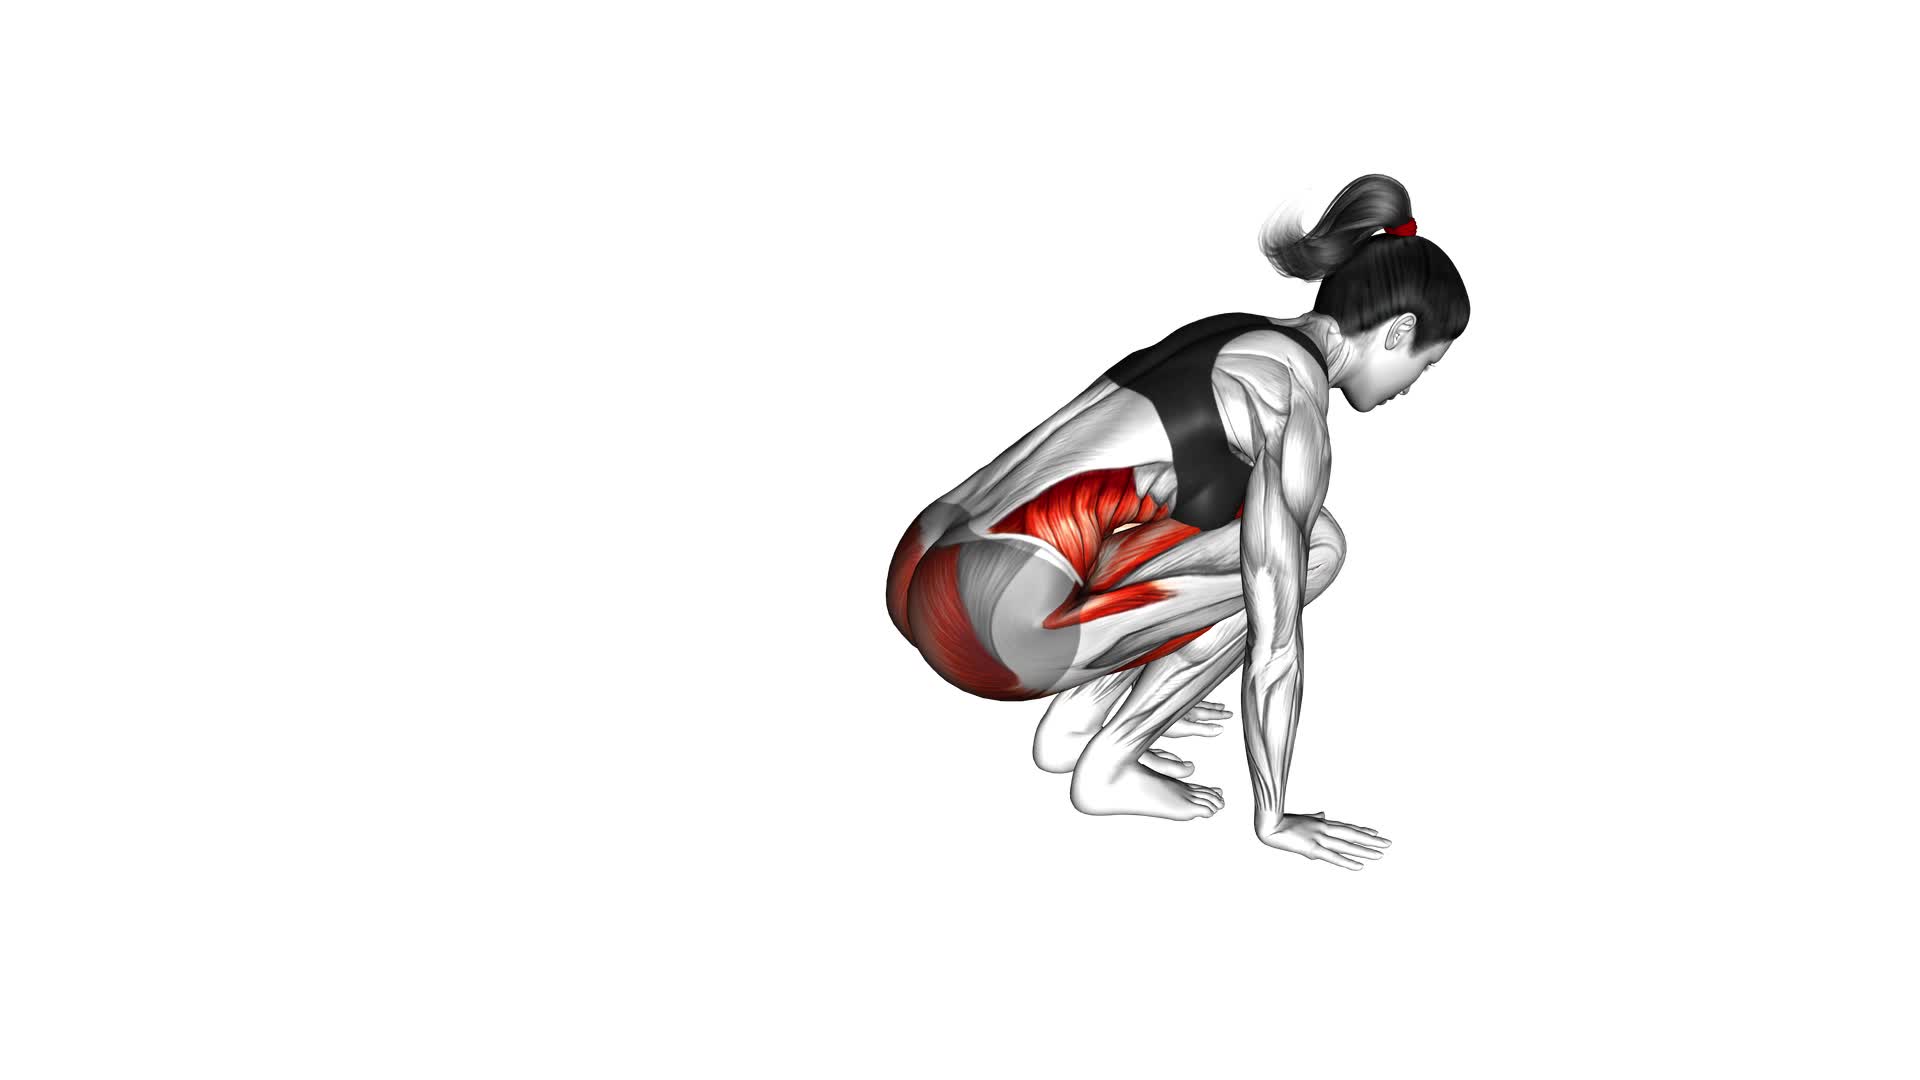 Squat Thrust (female) - Video Exercise Guide & Tips